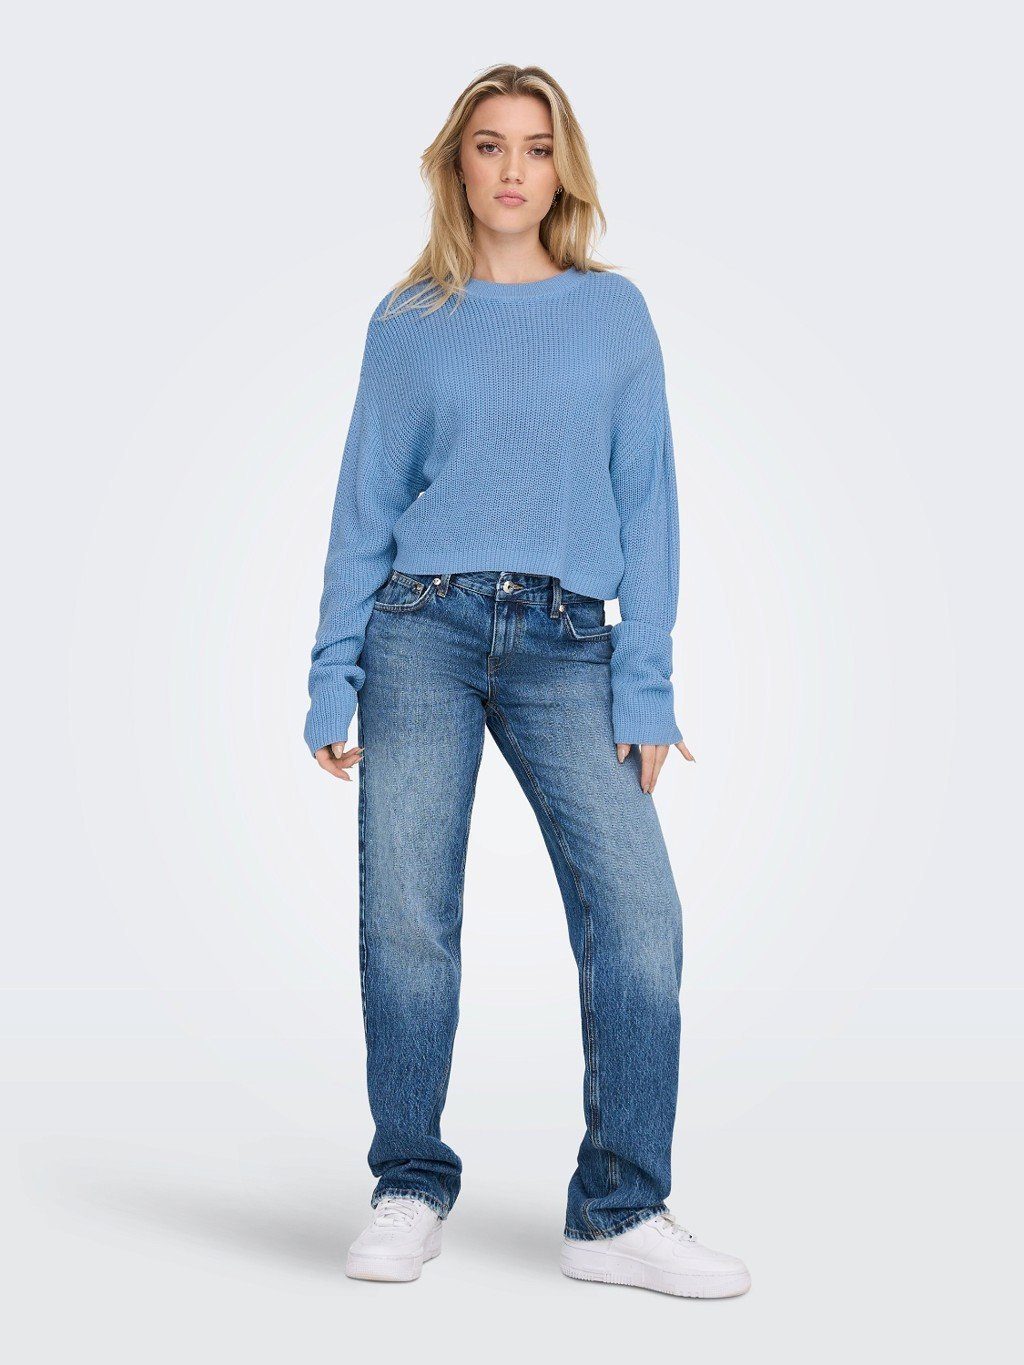 ONLY Pullover 4579 Sweater Cropped Strickpullover ONLMALAVI Blau Langarm Rippstrick in Kurzer